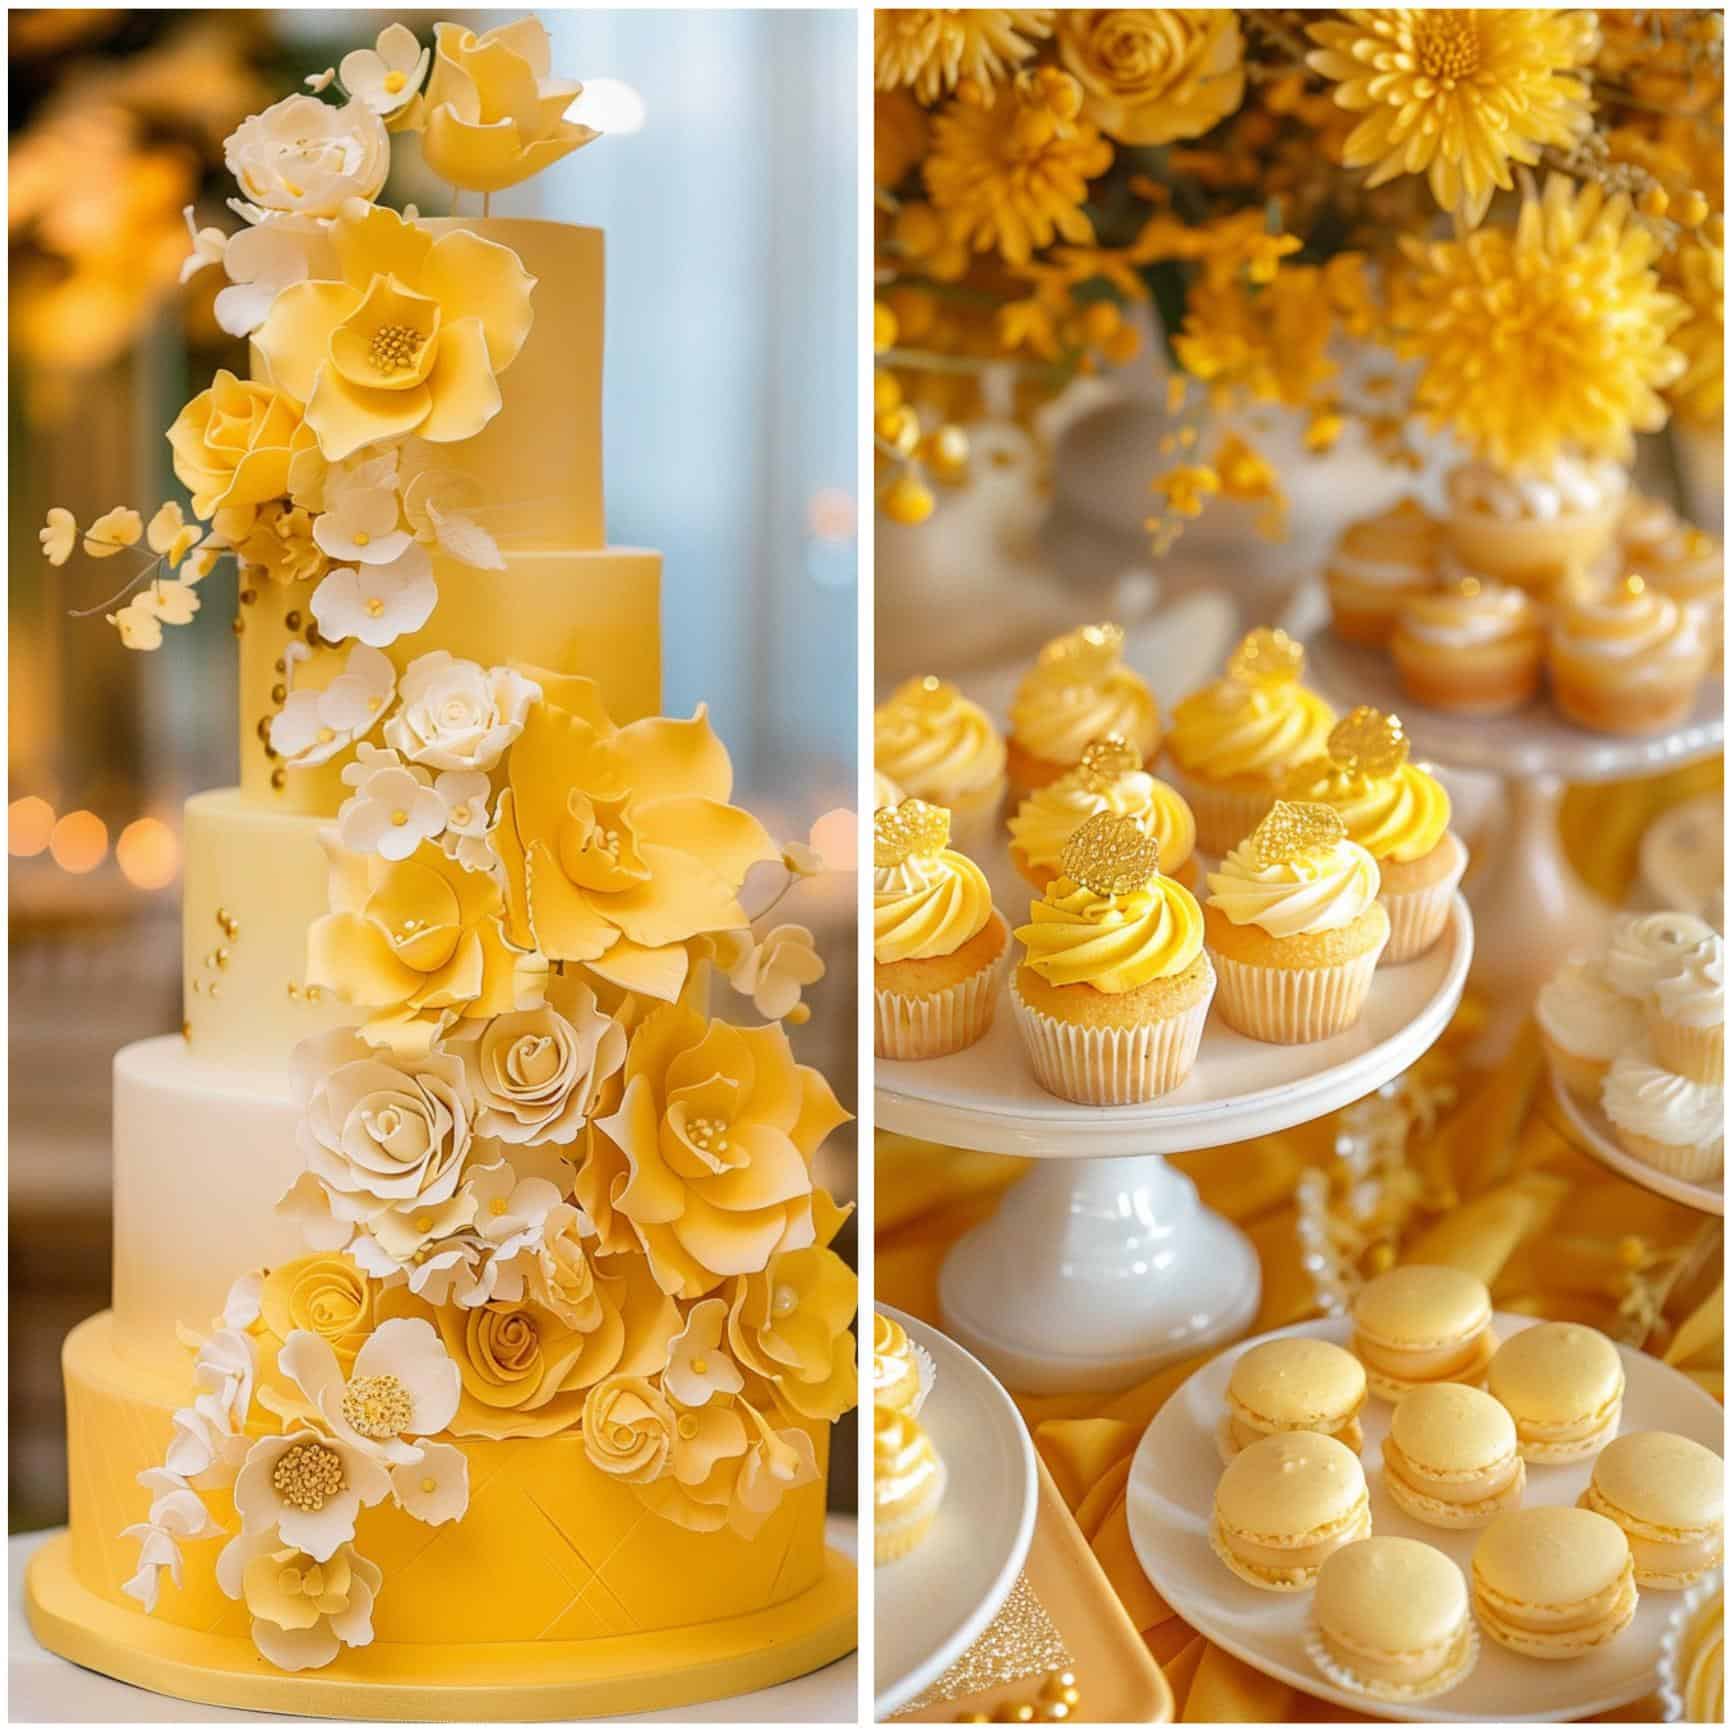 yellow wedding cake and desserts